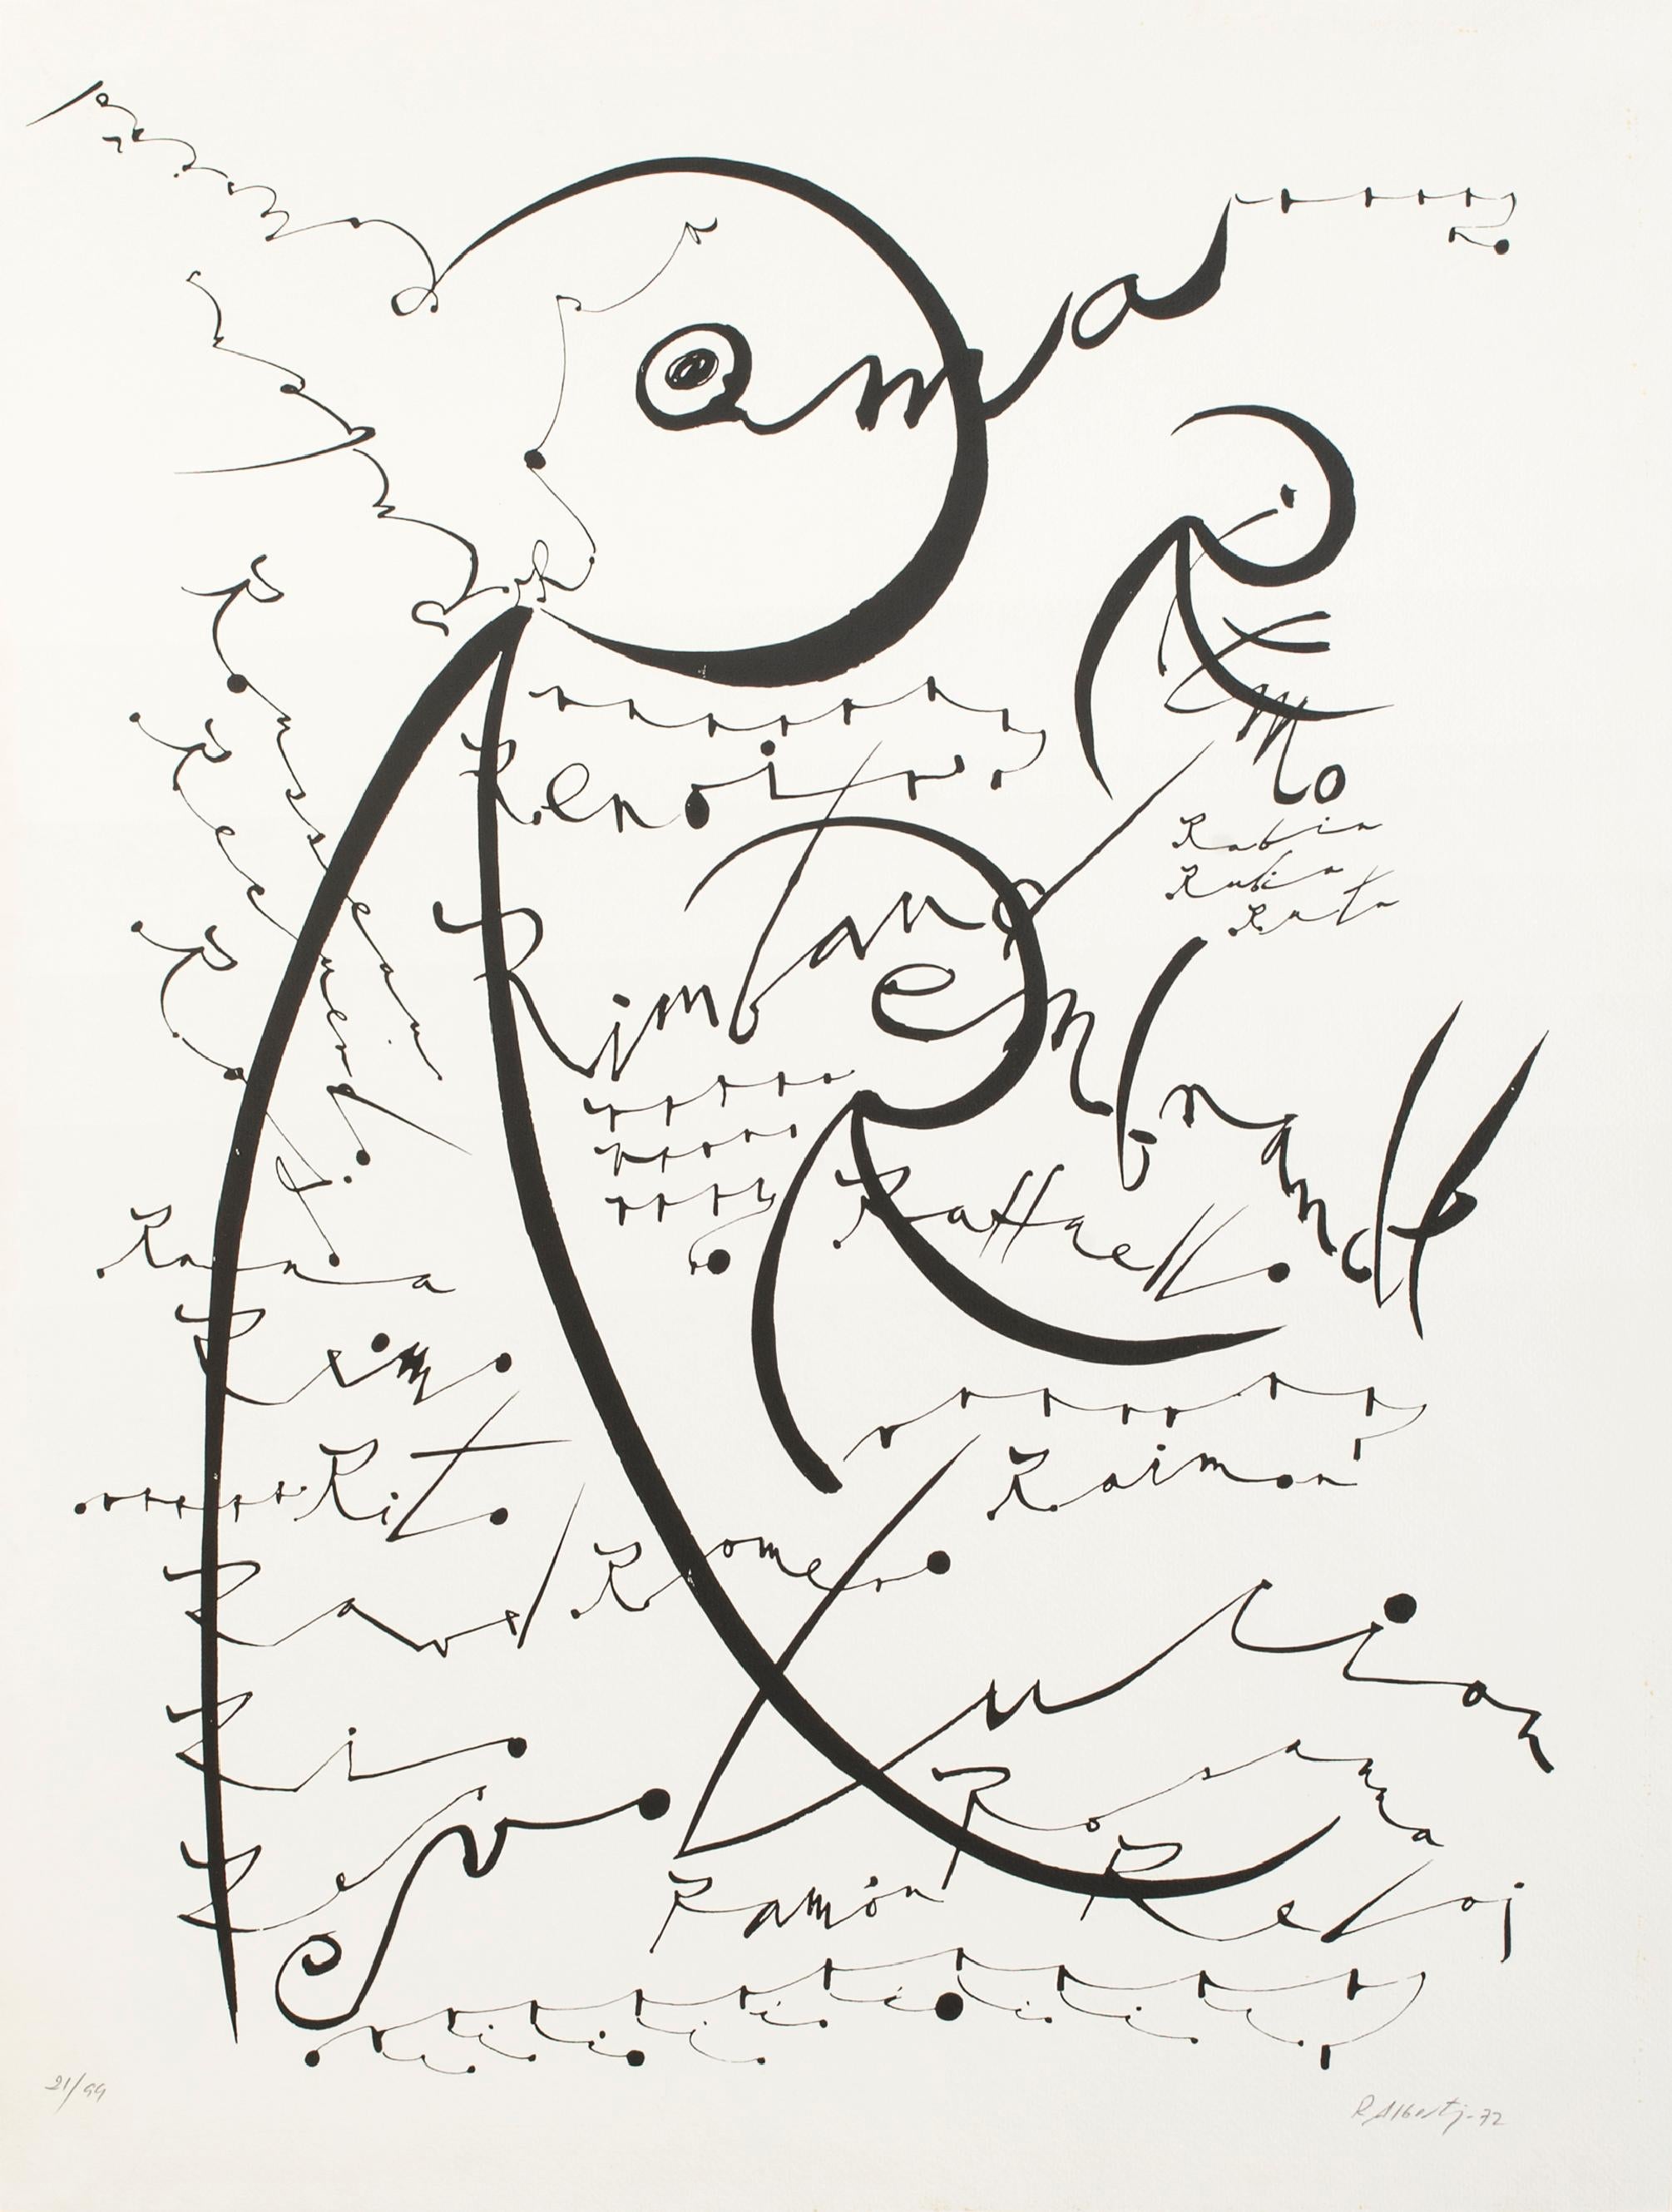 Rafael Alberti Abstract Print - Letter R - Original Lithograph by Raphael Alberti - 1972